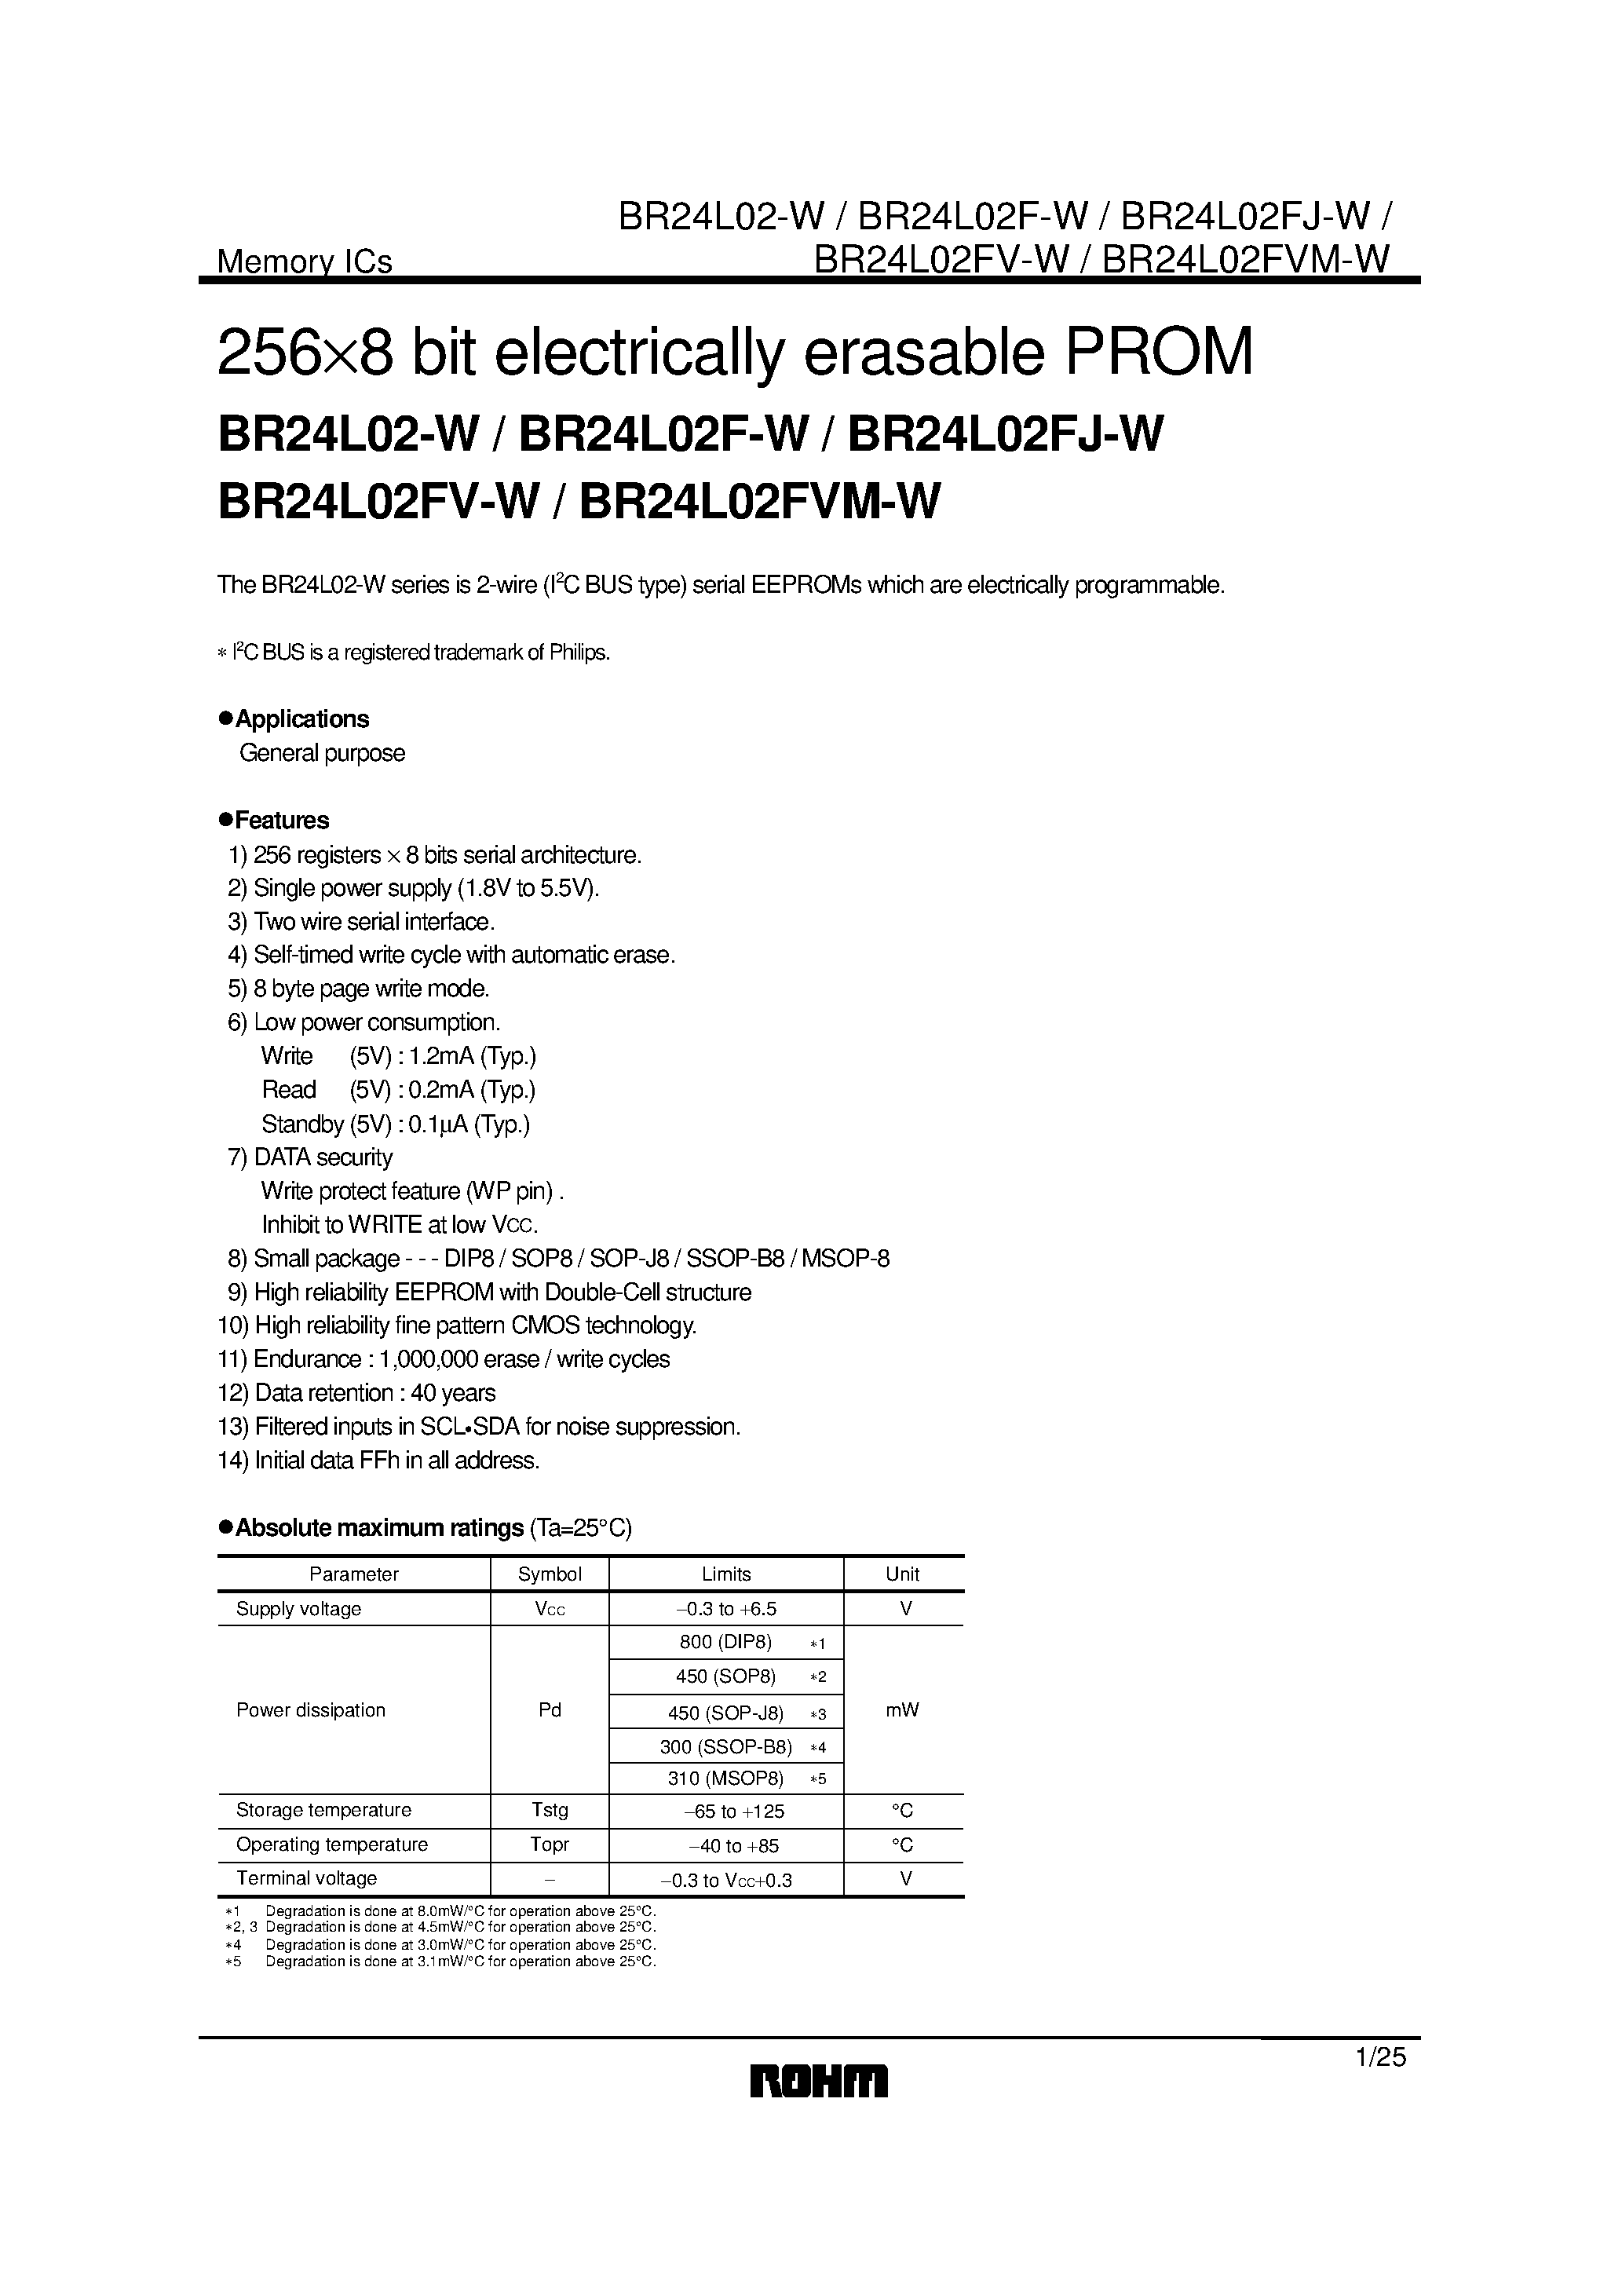 Datasheet BR24L02FV-W - 256x8 bit electrically erasable PROM page 1